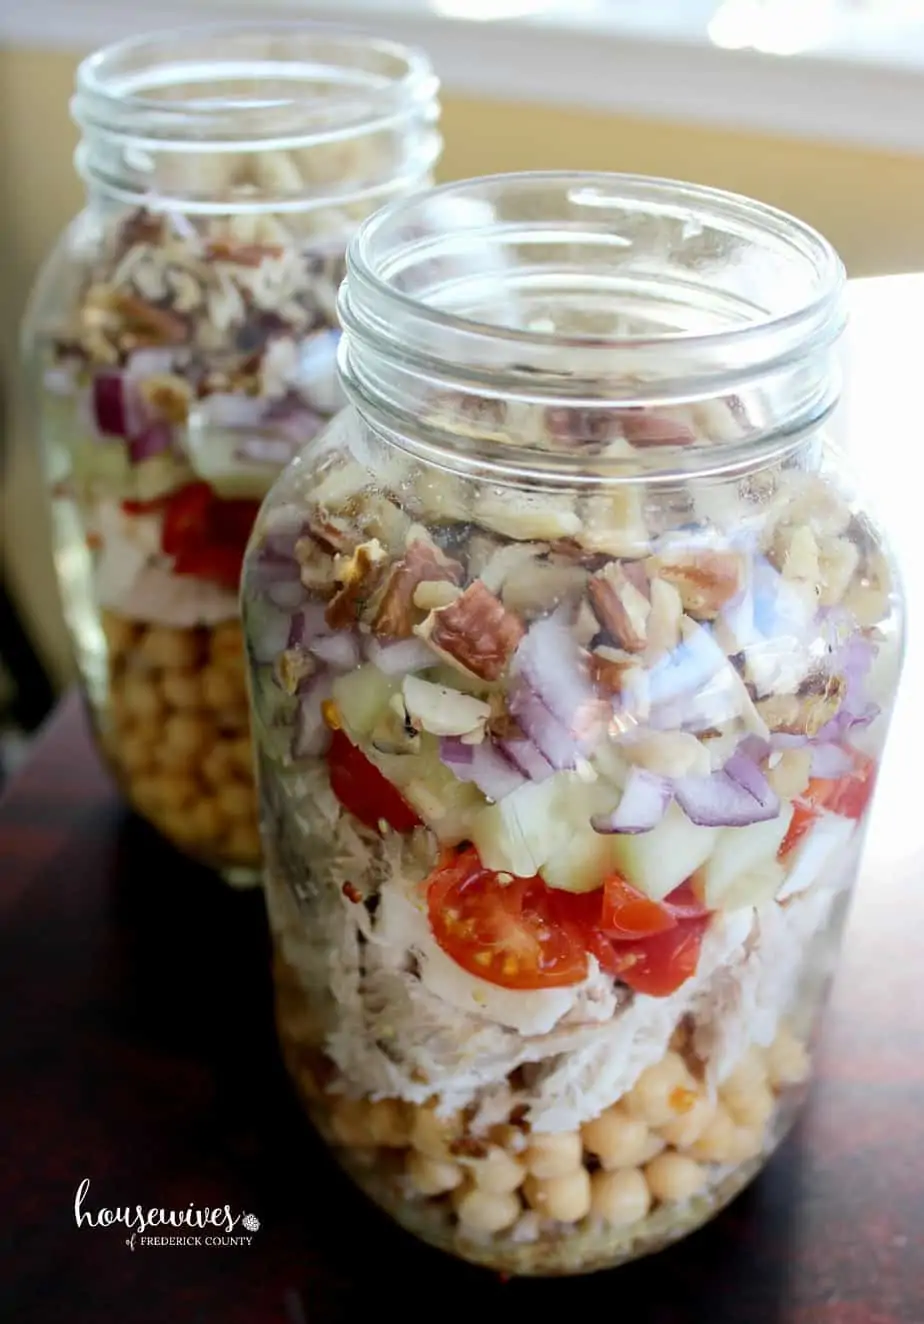 Mason Jar Salad Recipe